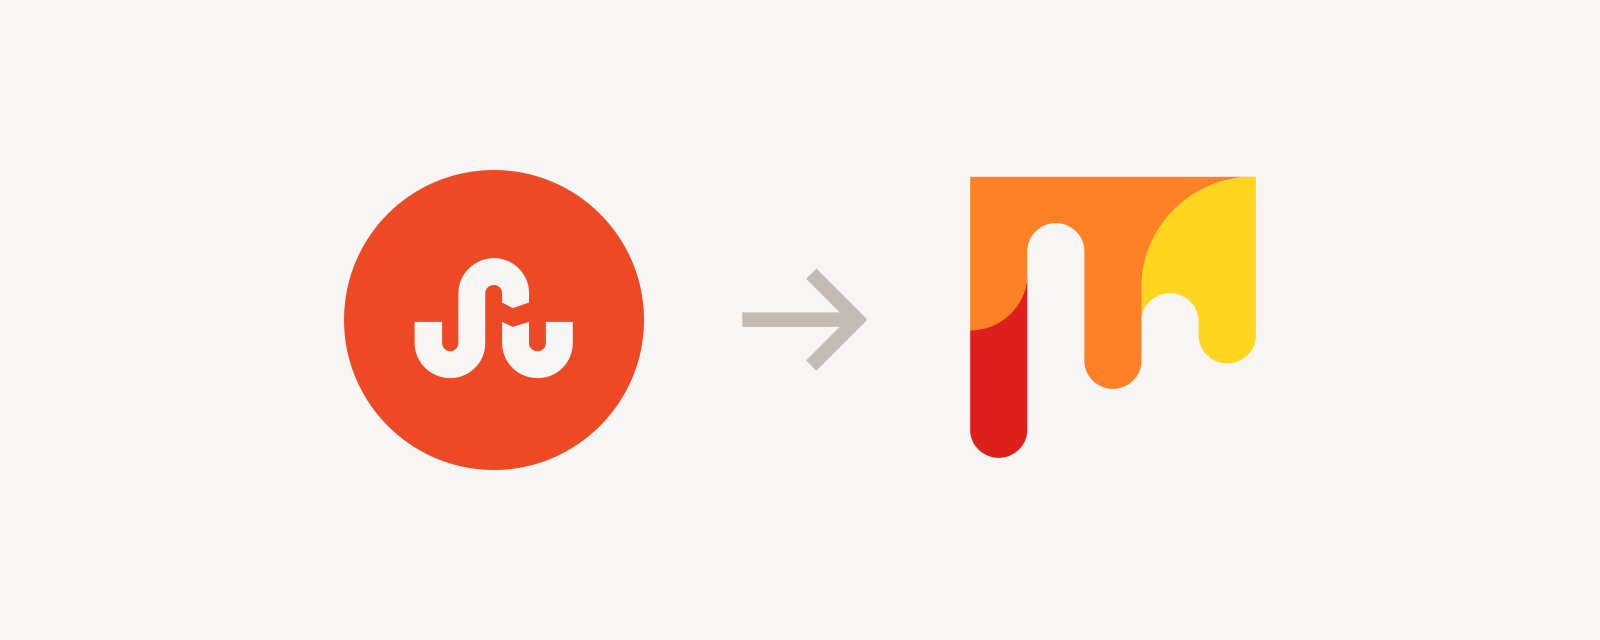 StumbleUpon closing down, founder introduces 'Mix' as a replacement option 4